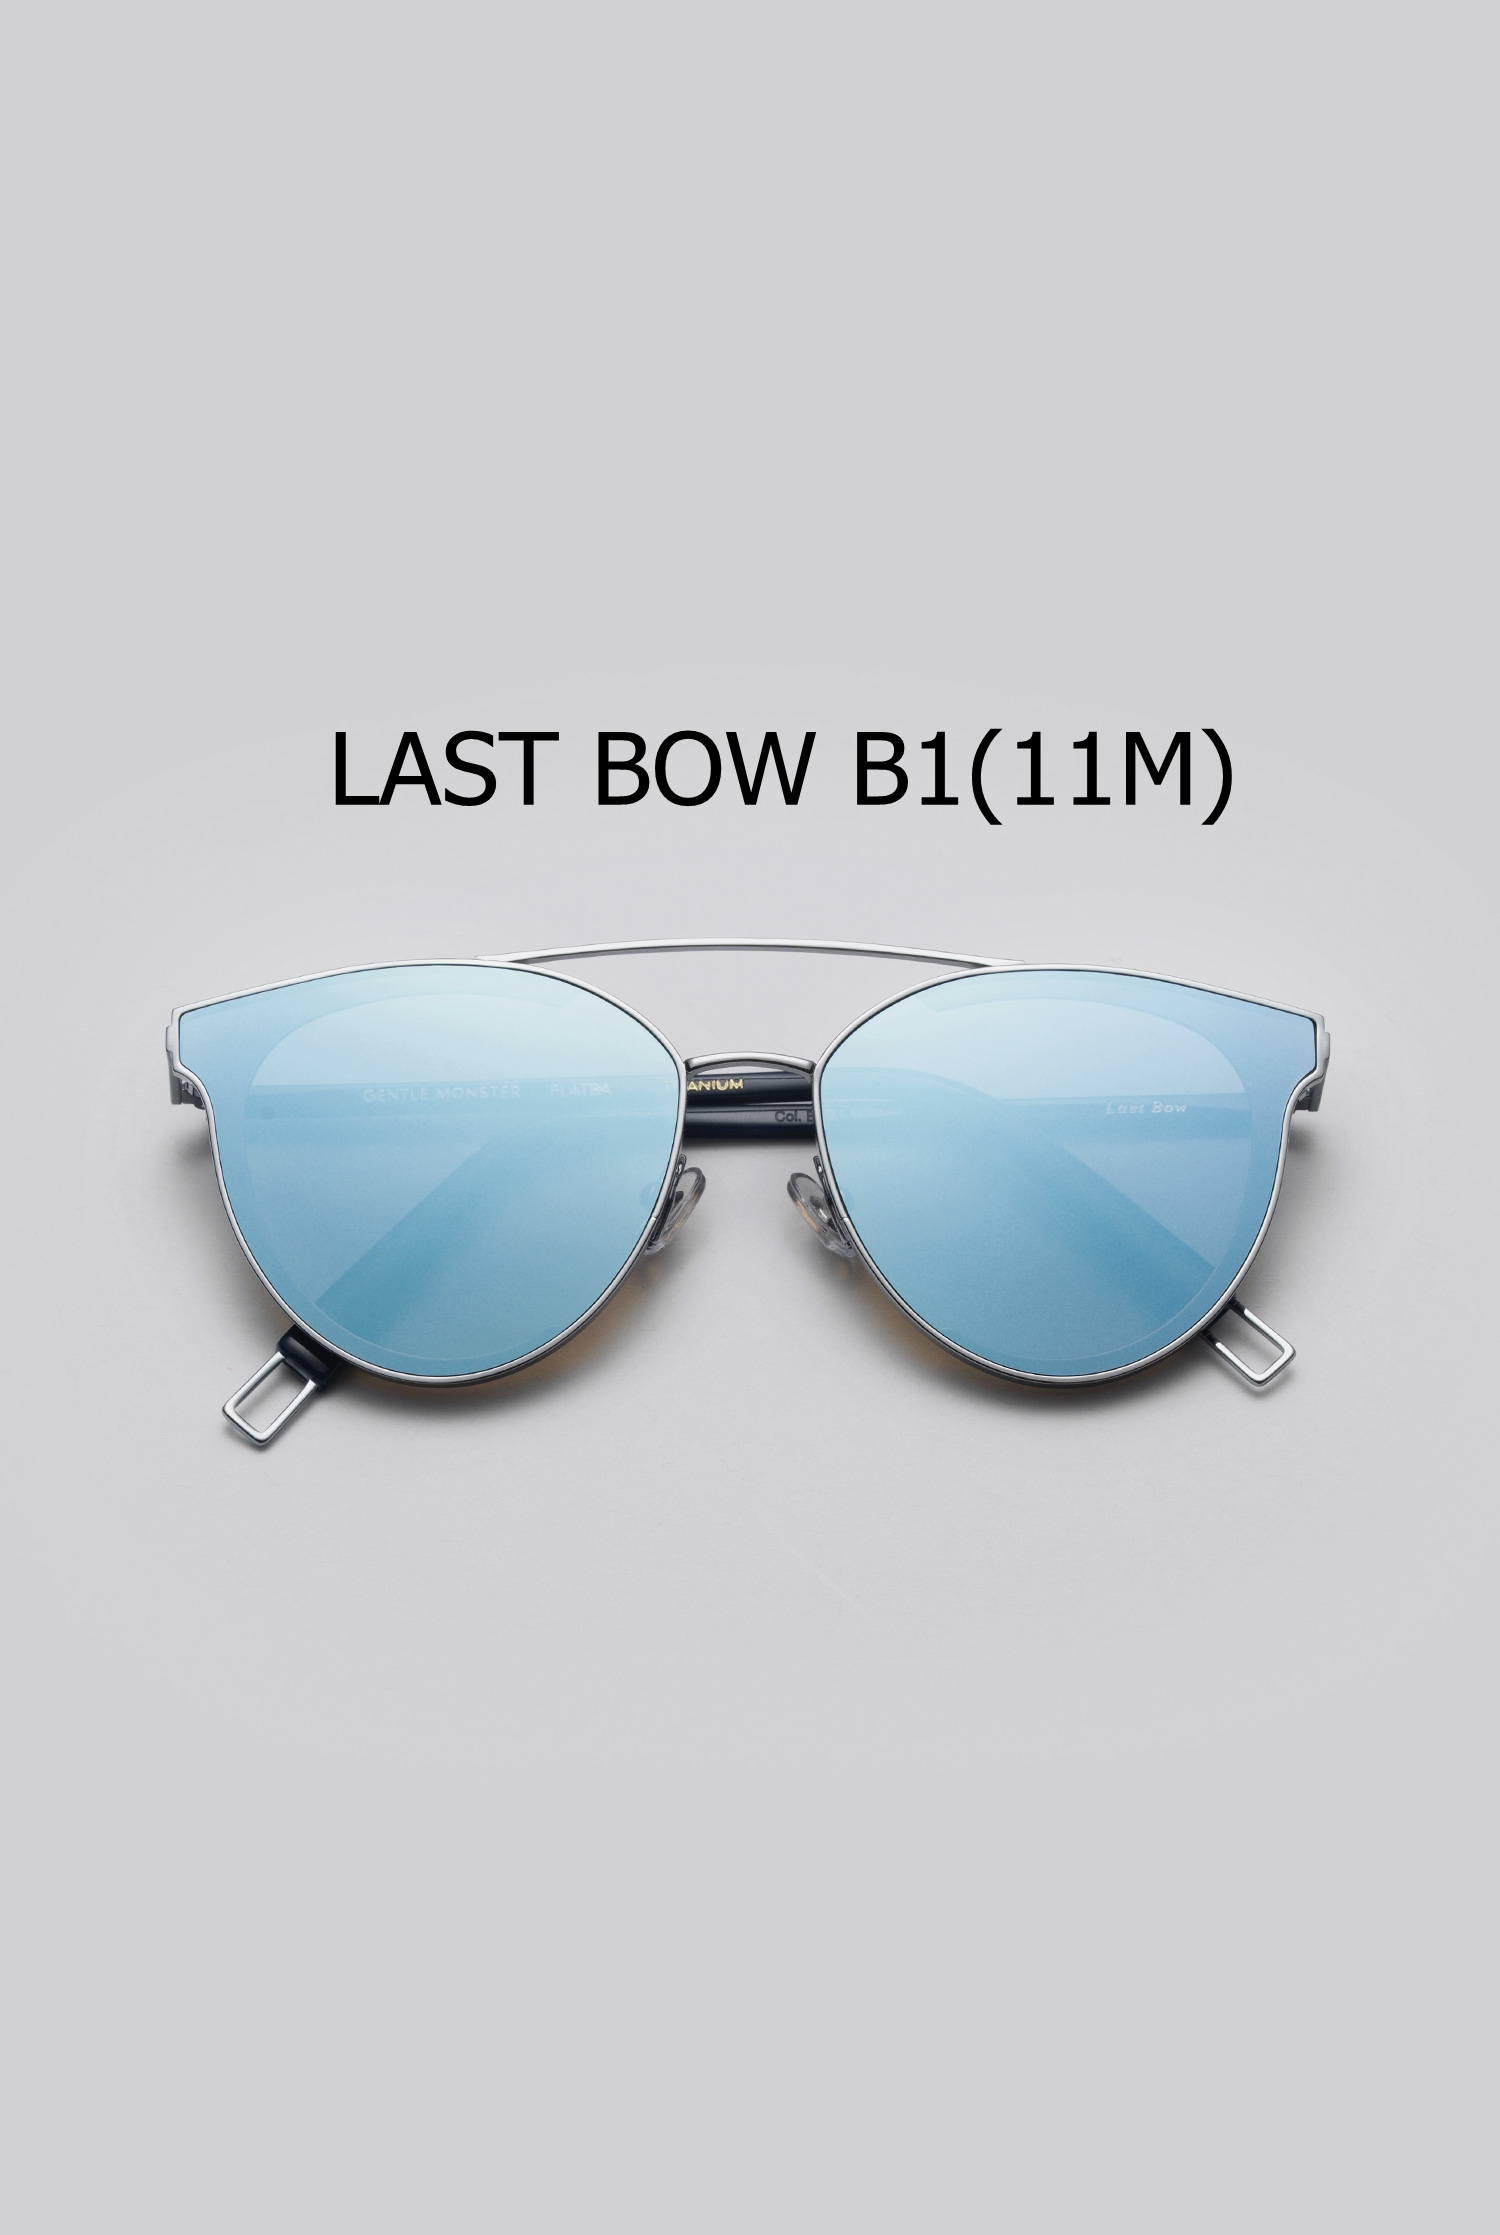 LAST BOW B1(11M) 